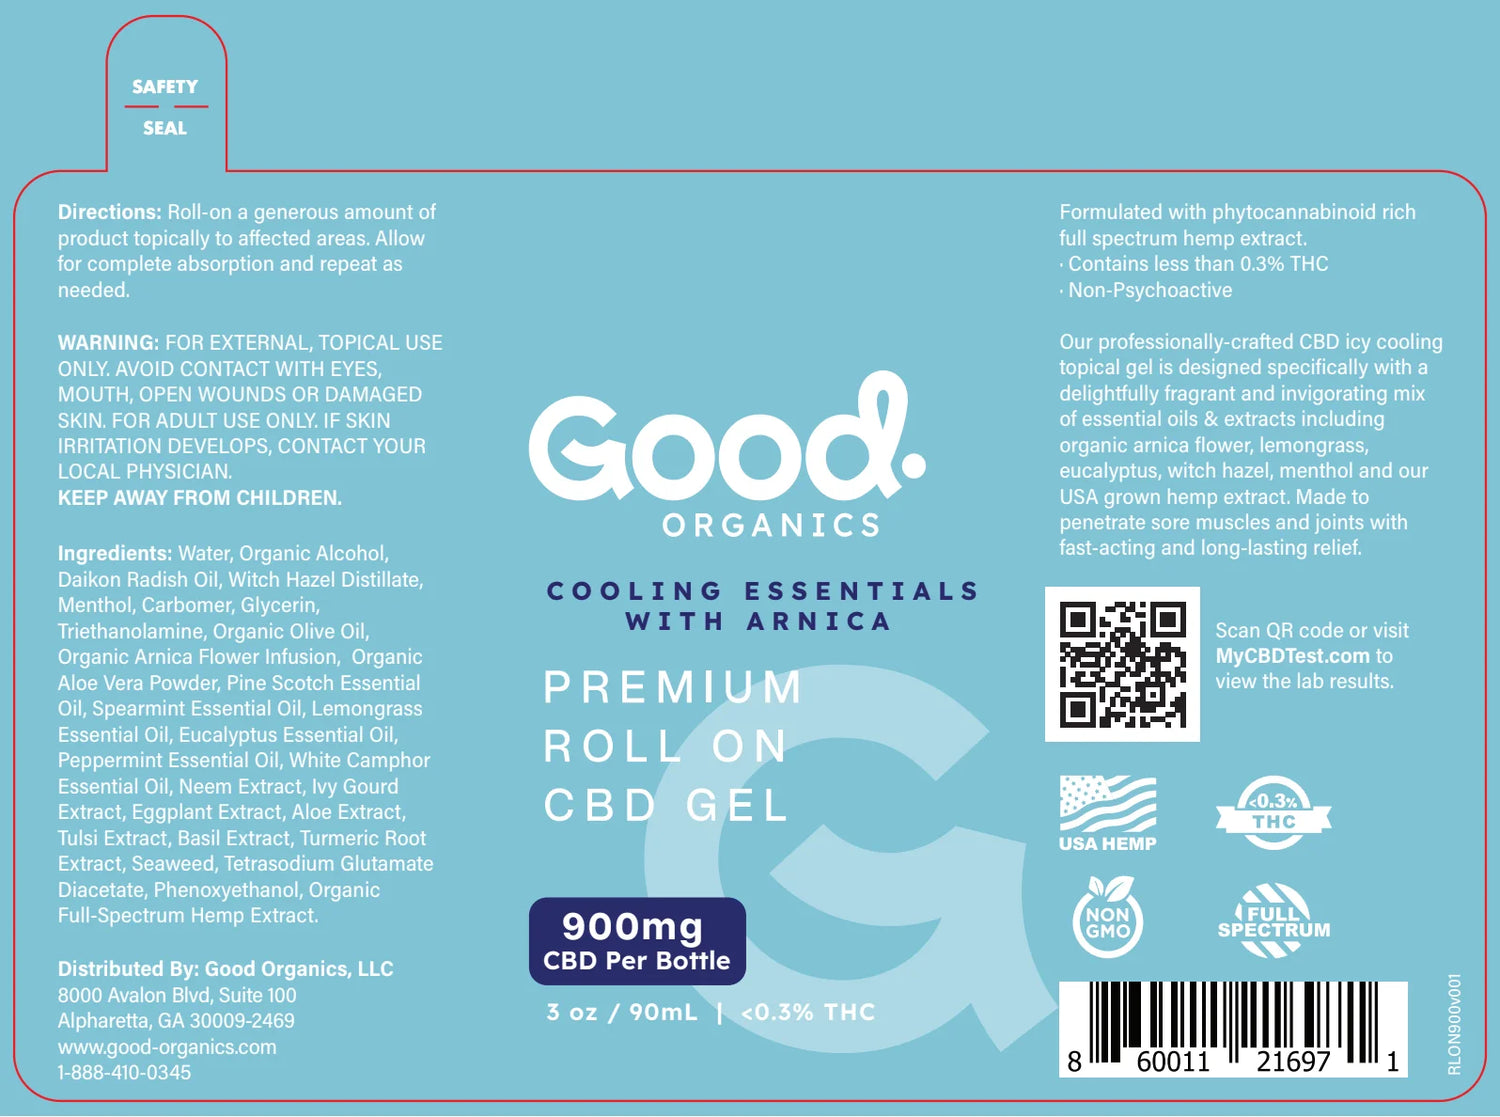 900mg Roll-on CBD Gel Cooling Essentials with Arnica (3oz.) - Good Organics